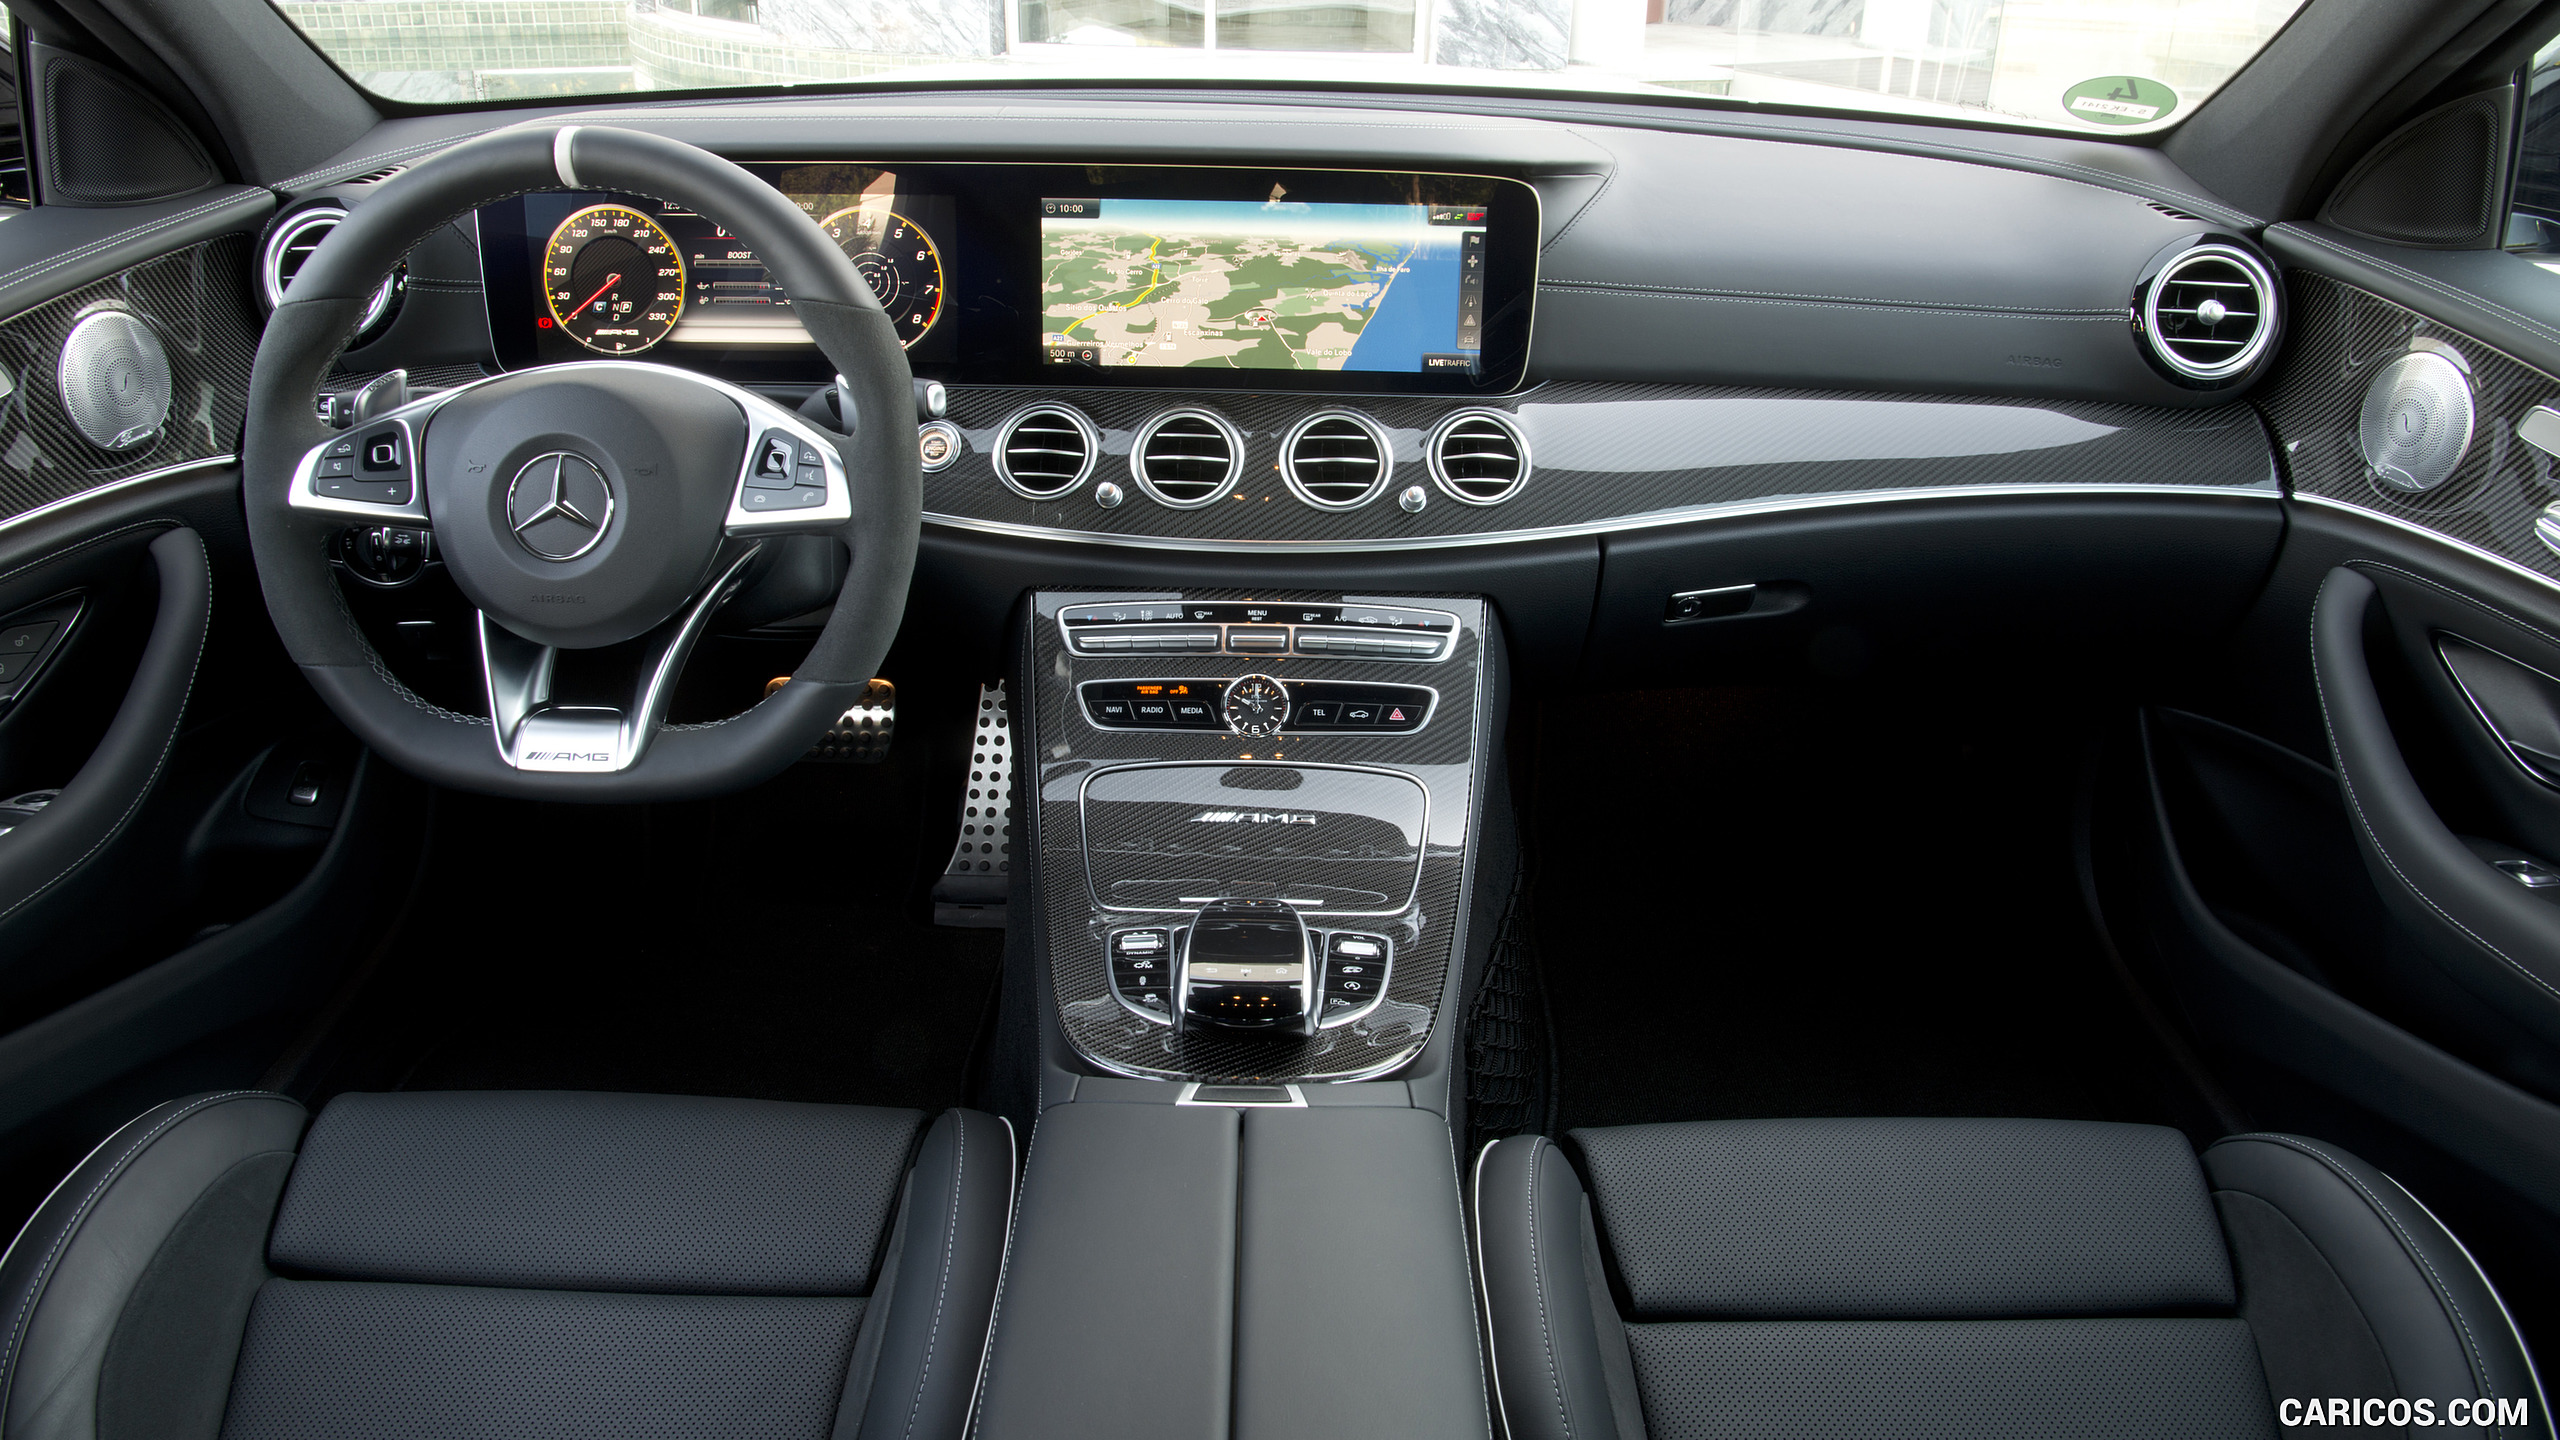 2018 Mercedes-AMG E63 S 4MATIC+ - Interior, Cockpit, #139 of 323